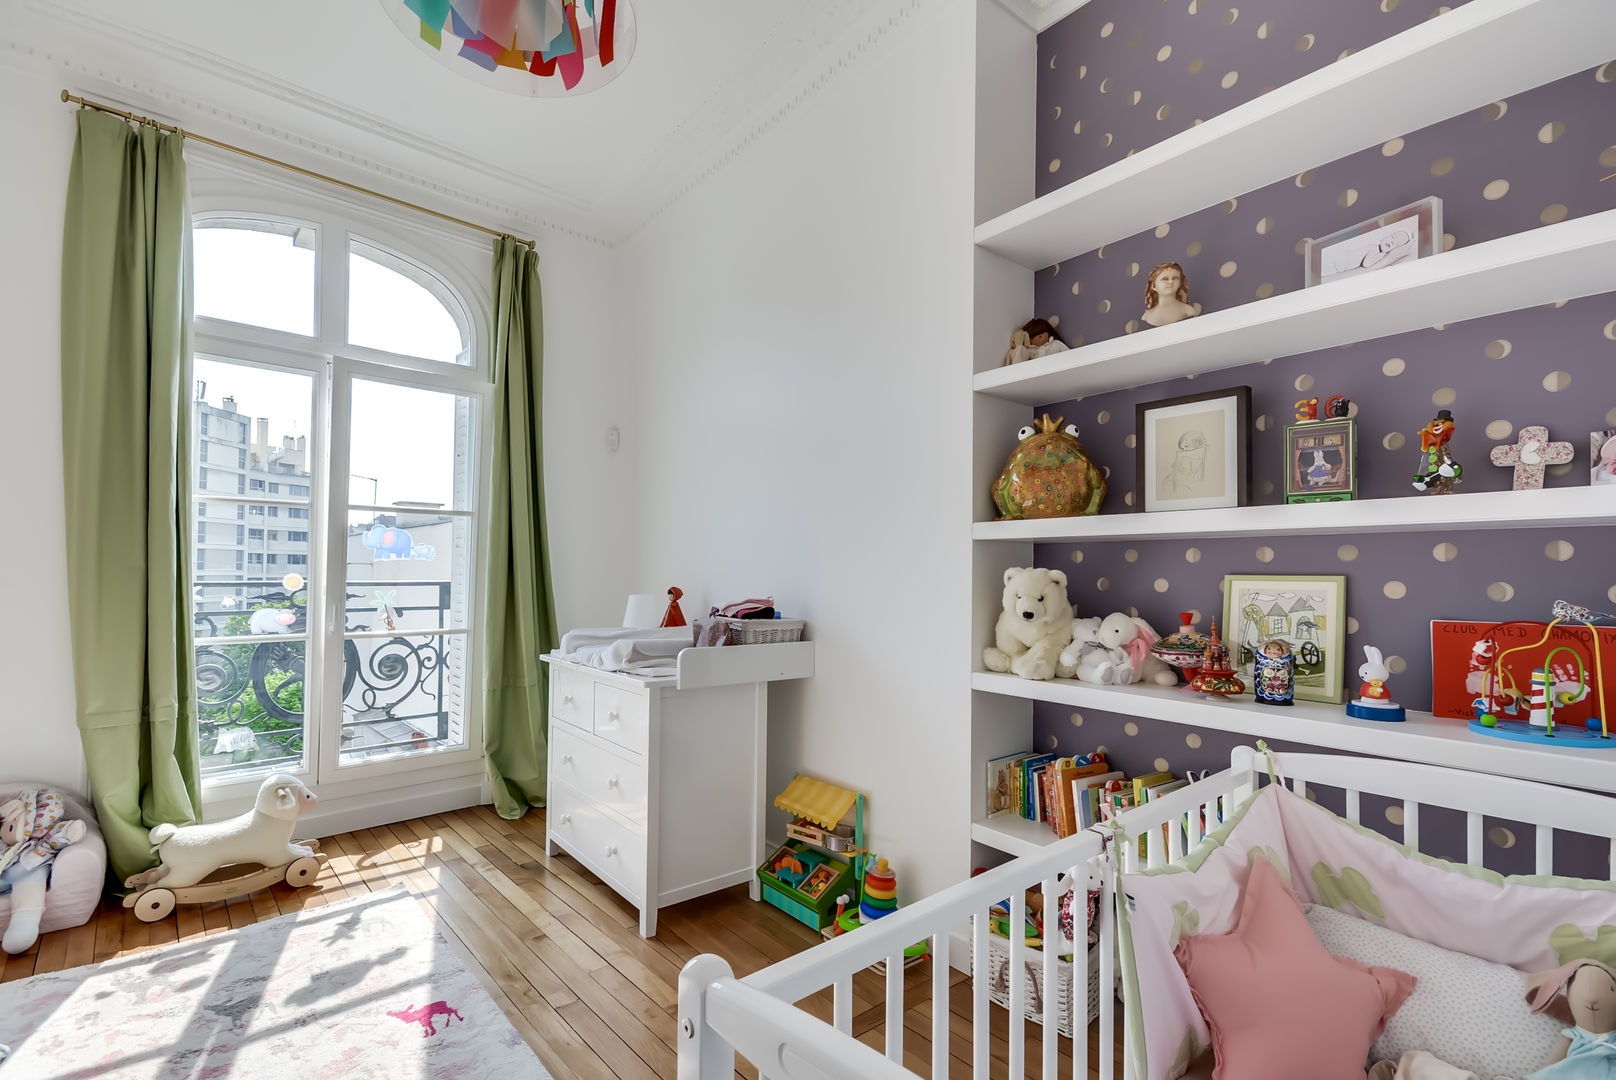 Un appartement haussmanien revisité - Paris 16e, ATELIER FB ATELIER FB غرفة الاطفال